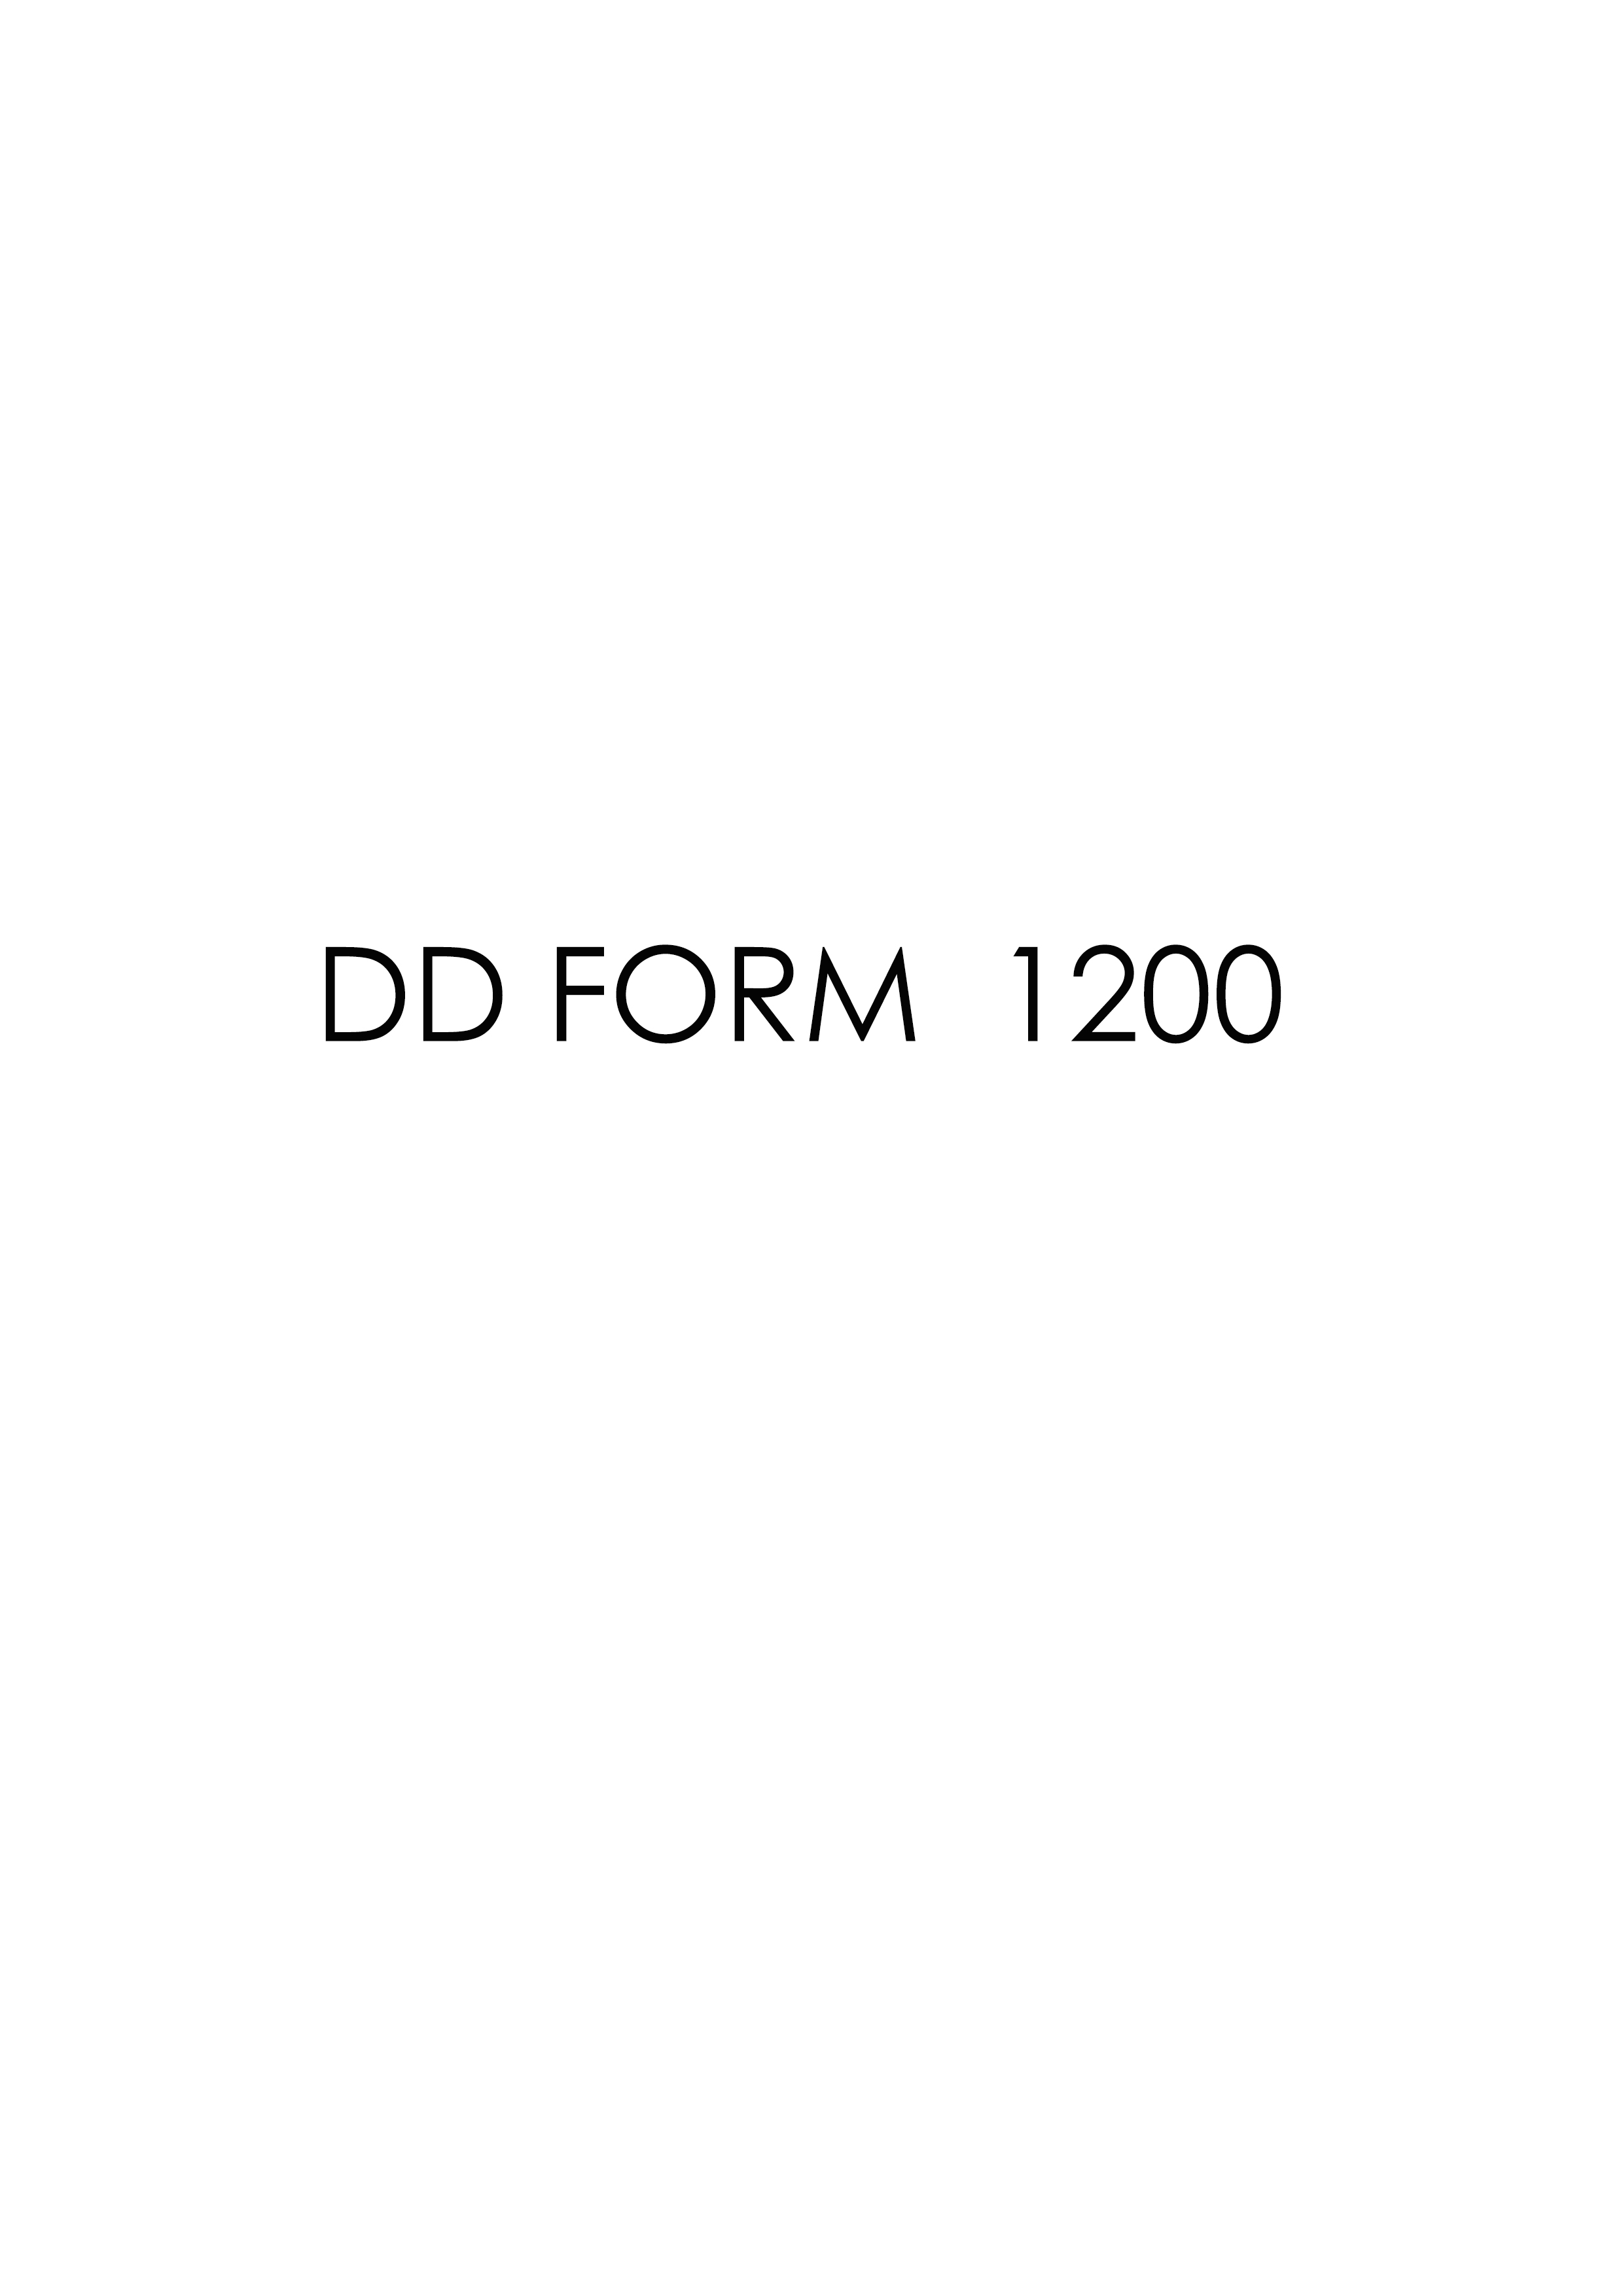 Download dd Form 1200